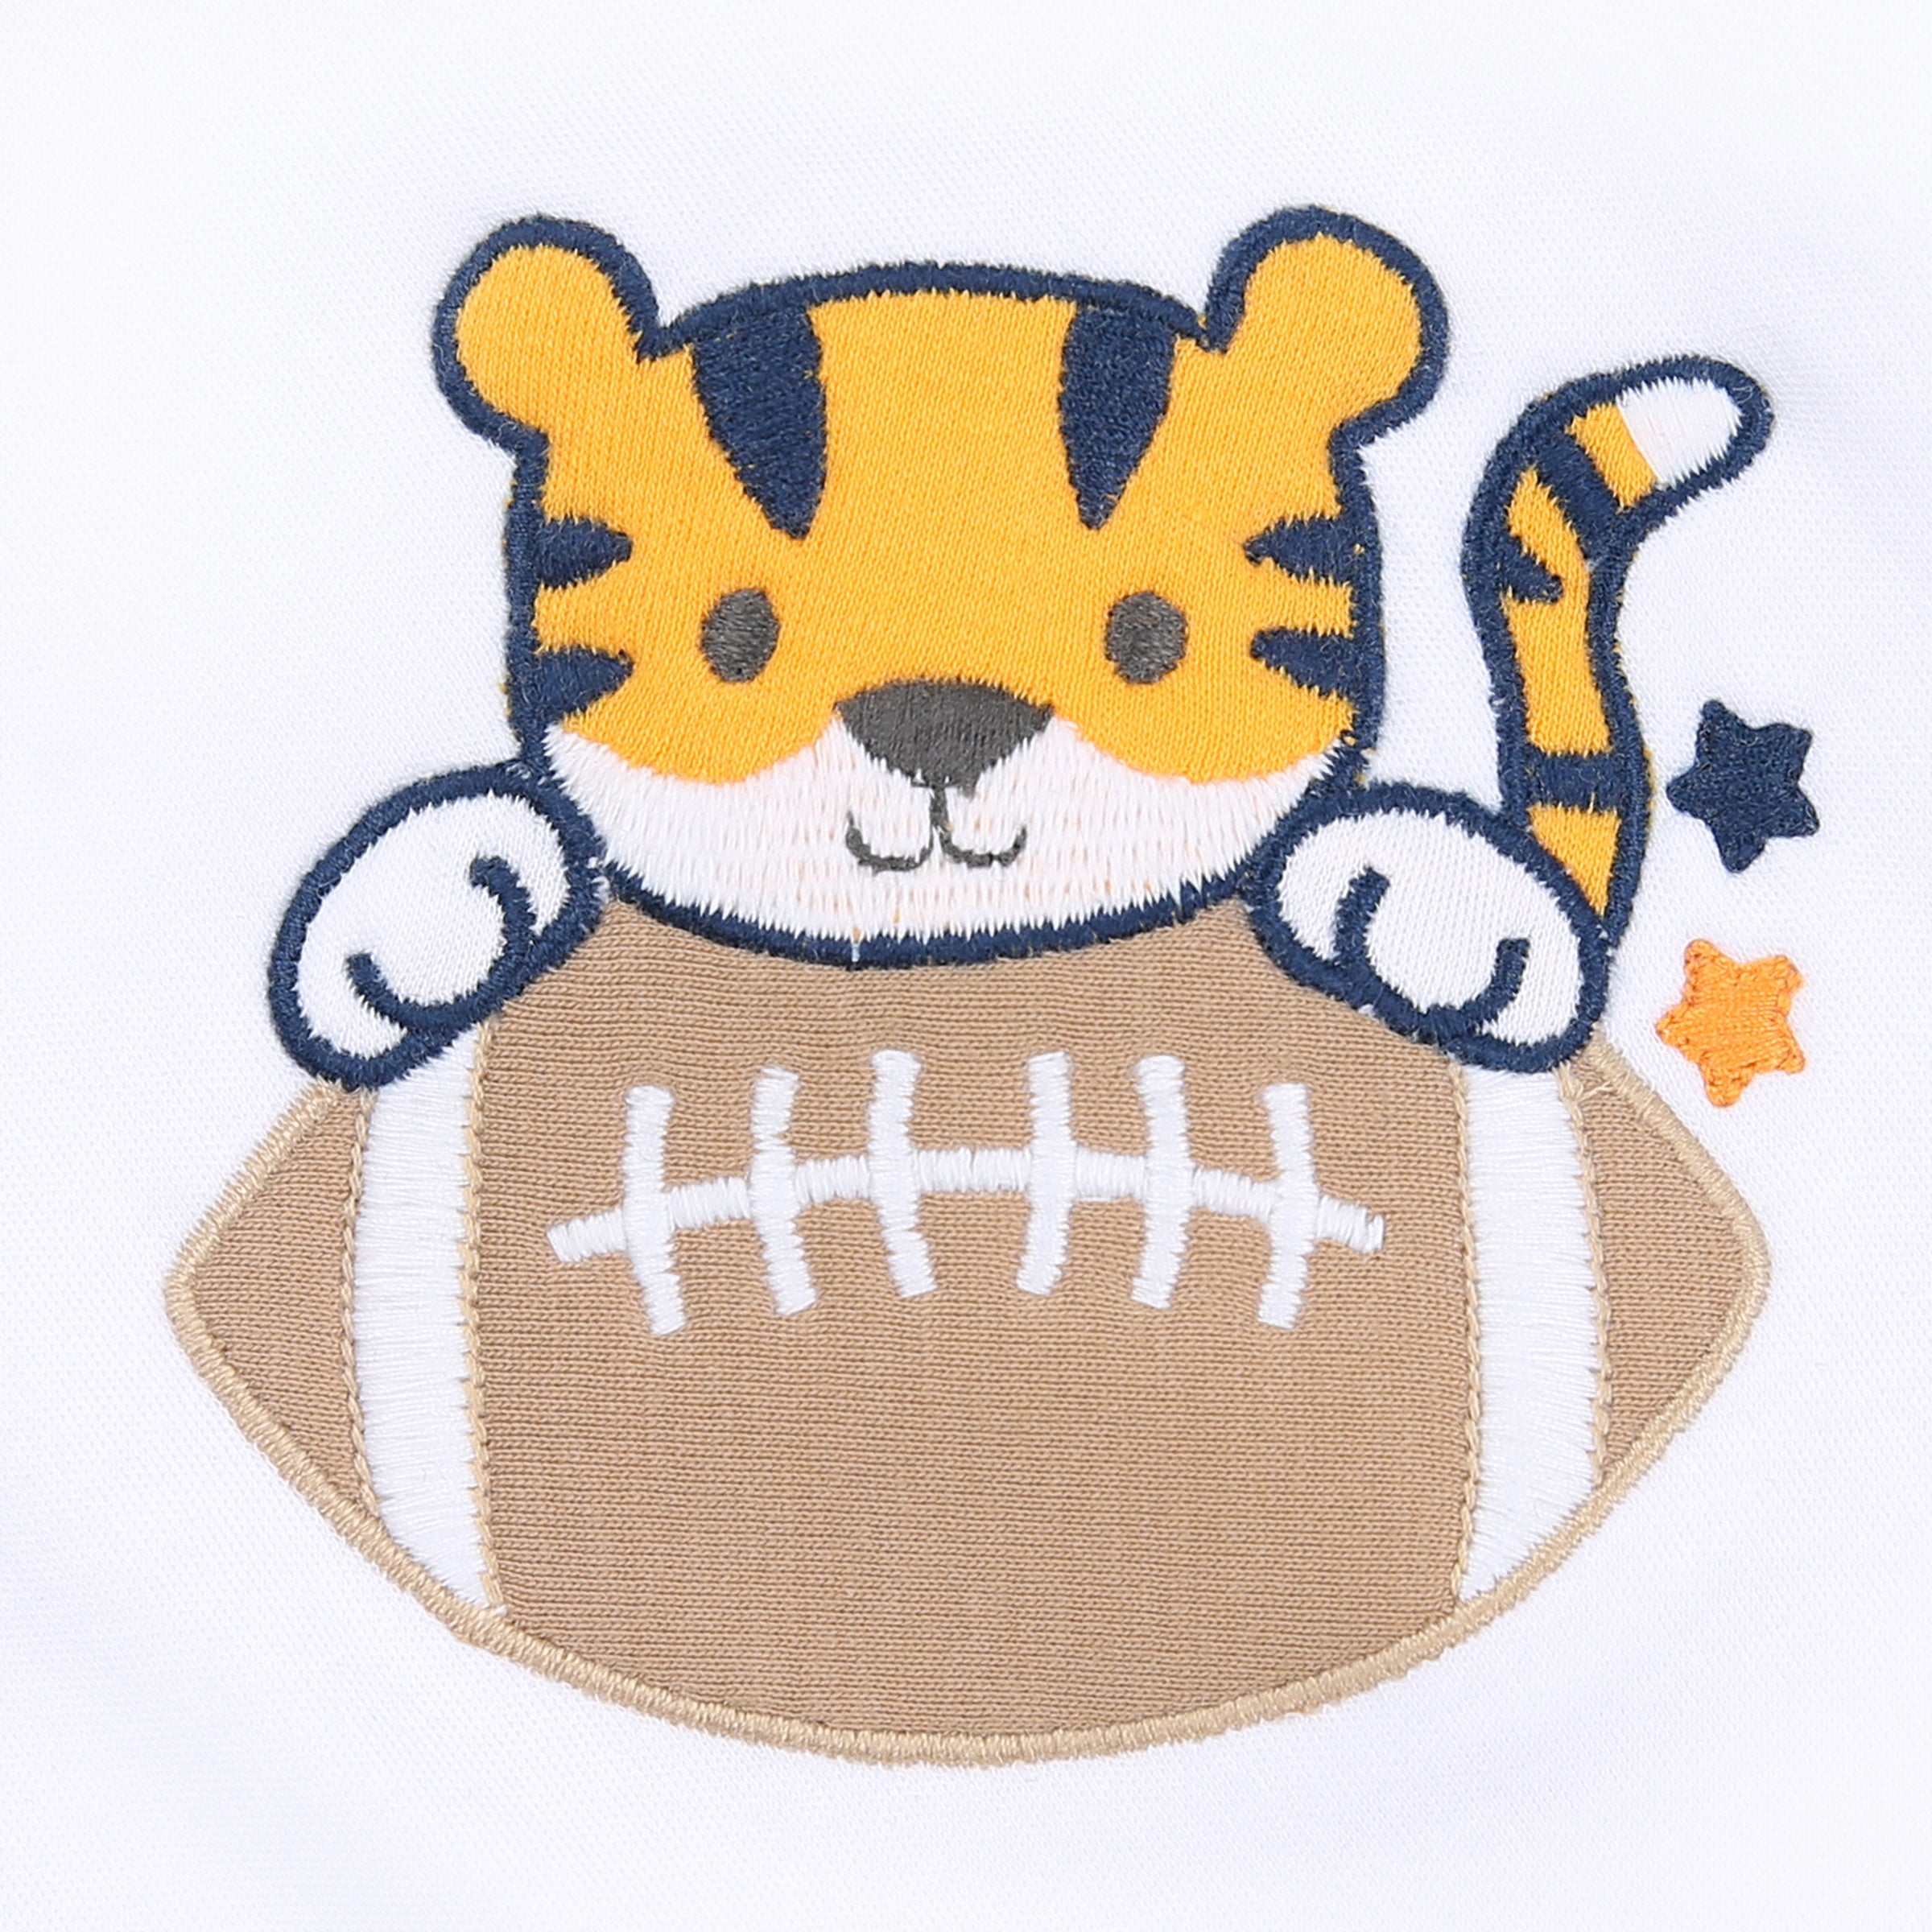 Tiger Football Boy Short Set - Navy/Orange